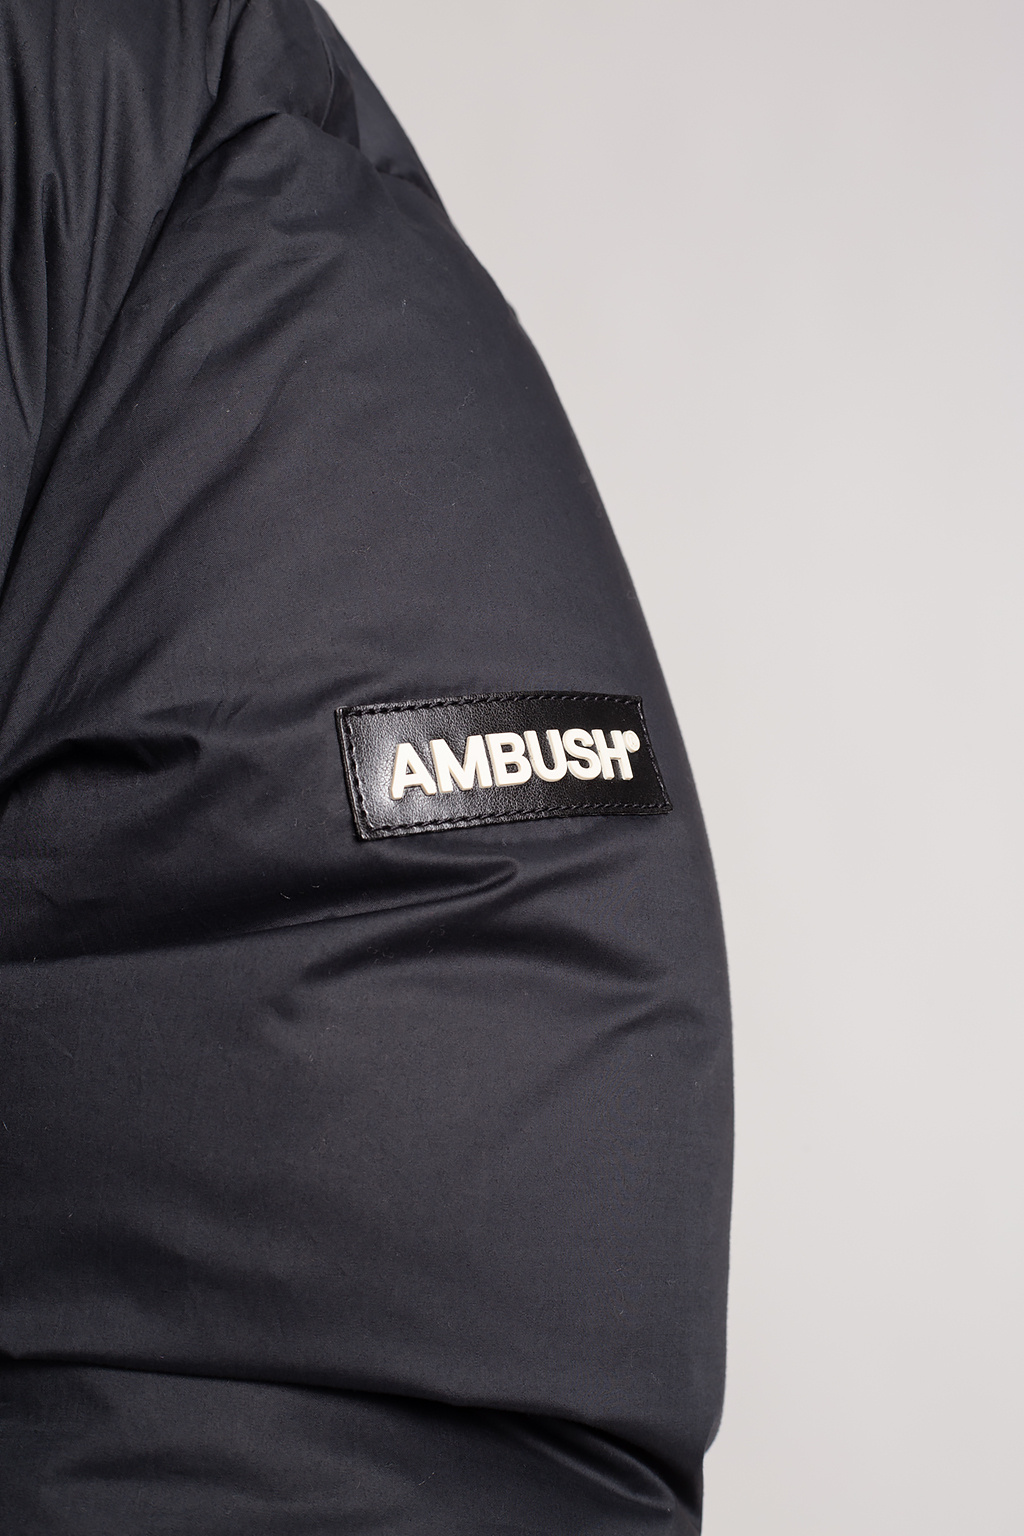 Ambush Jersey v-neck shirt